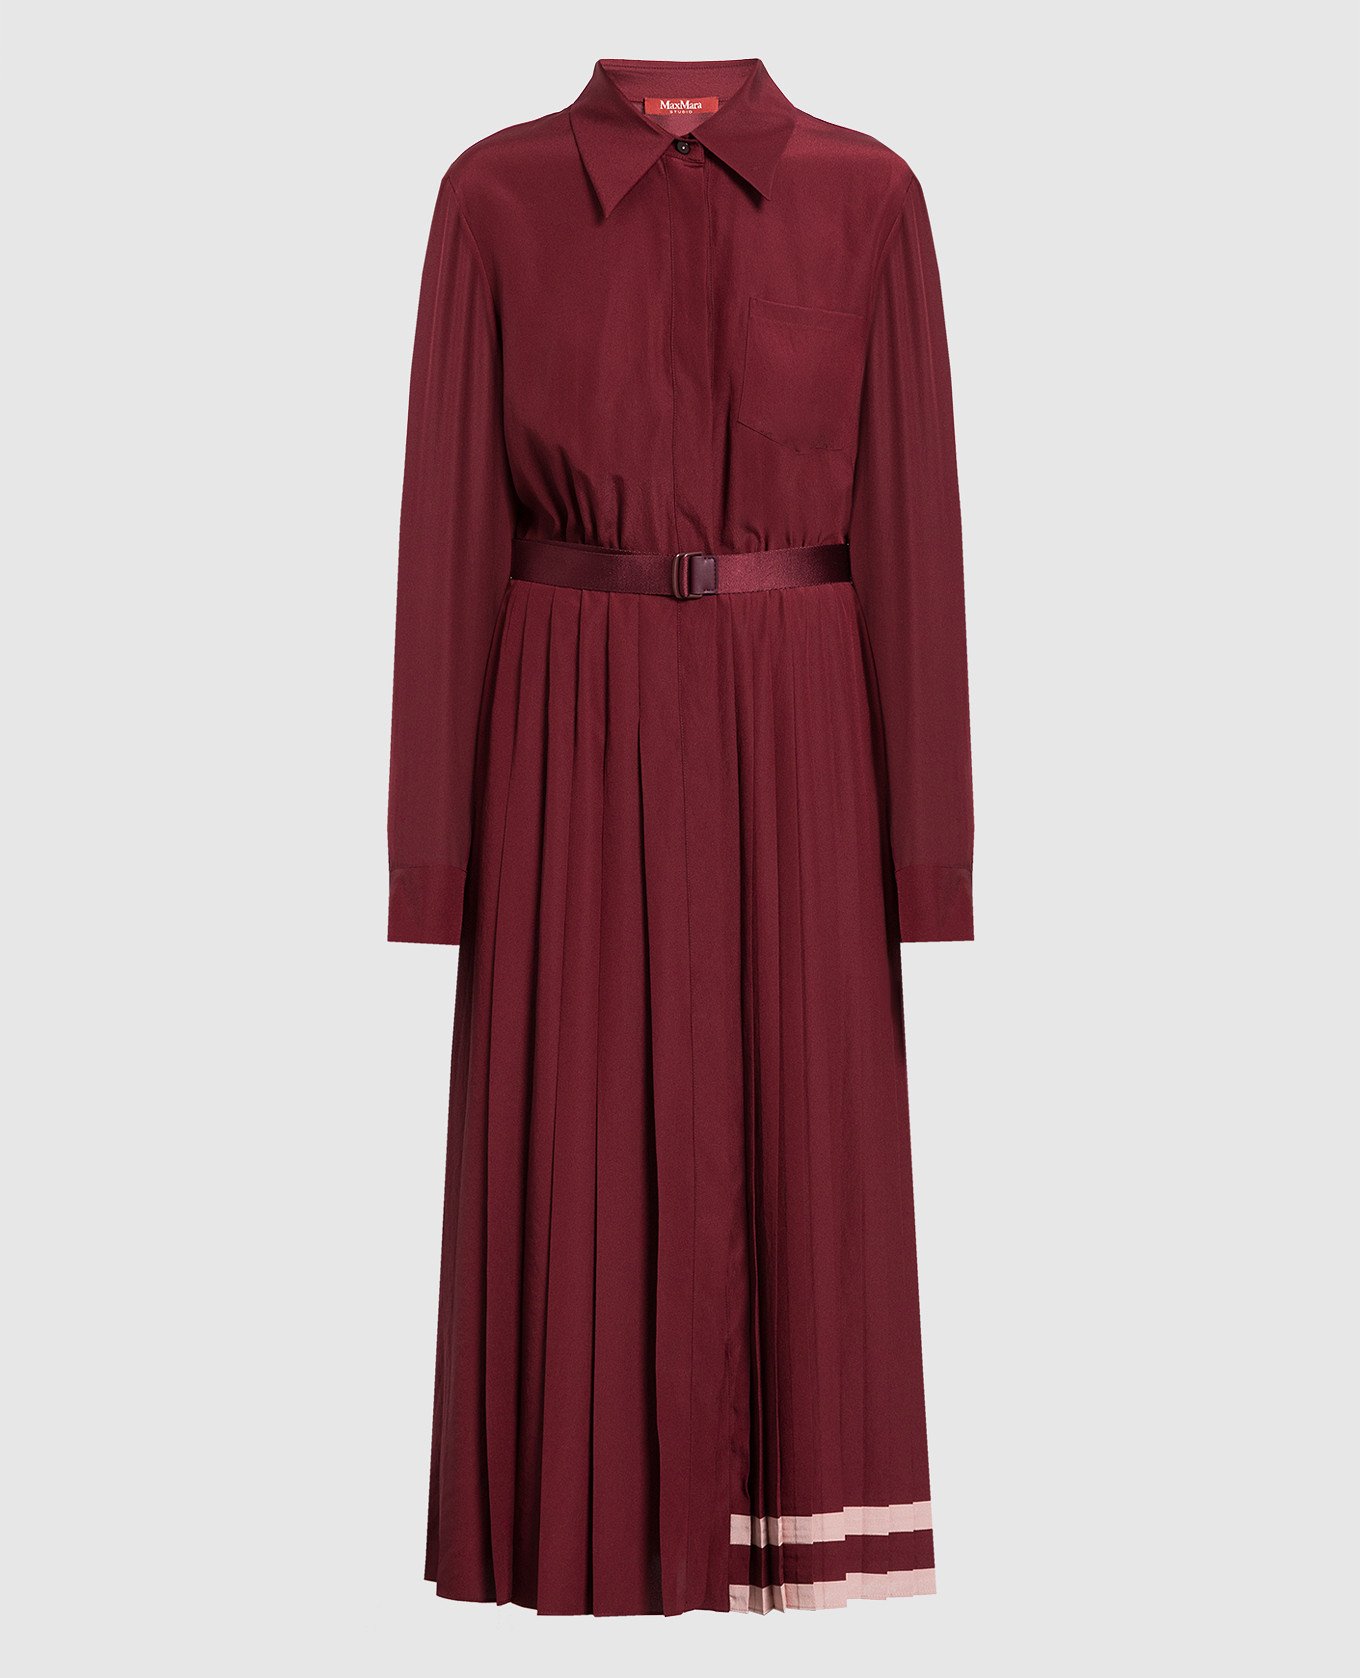 Sandalo burgundy pleated shirt dress